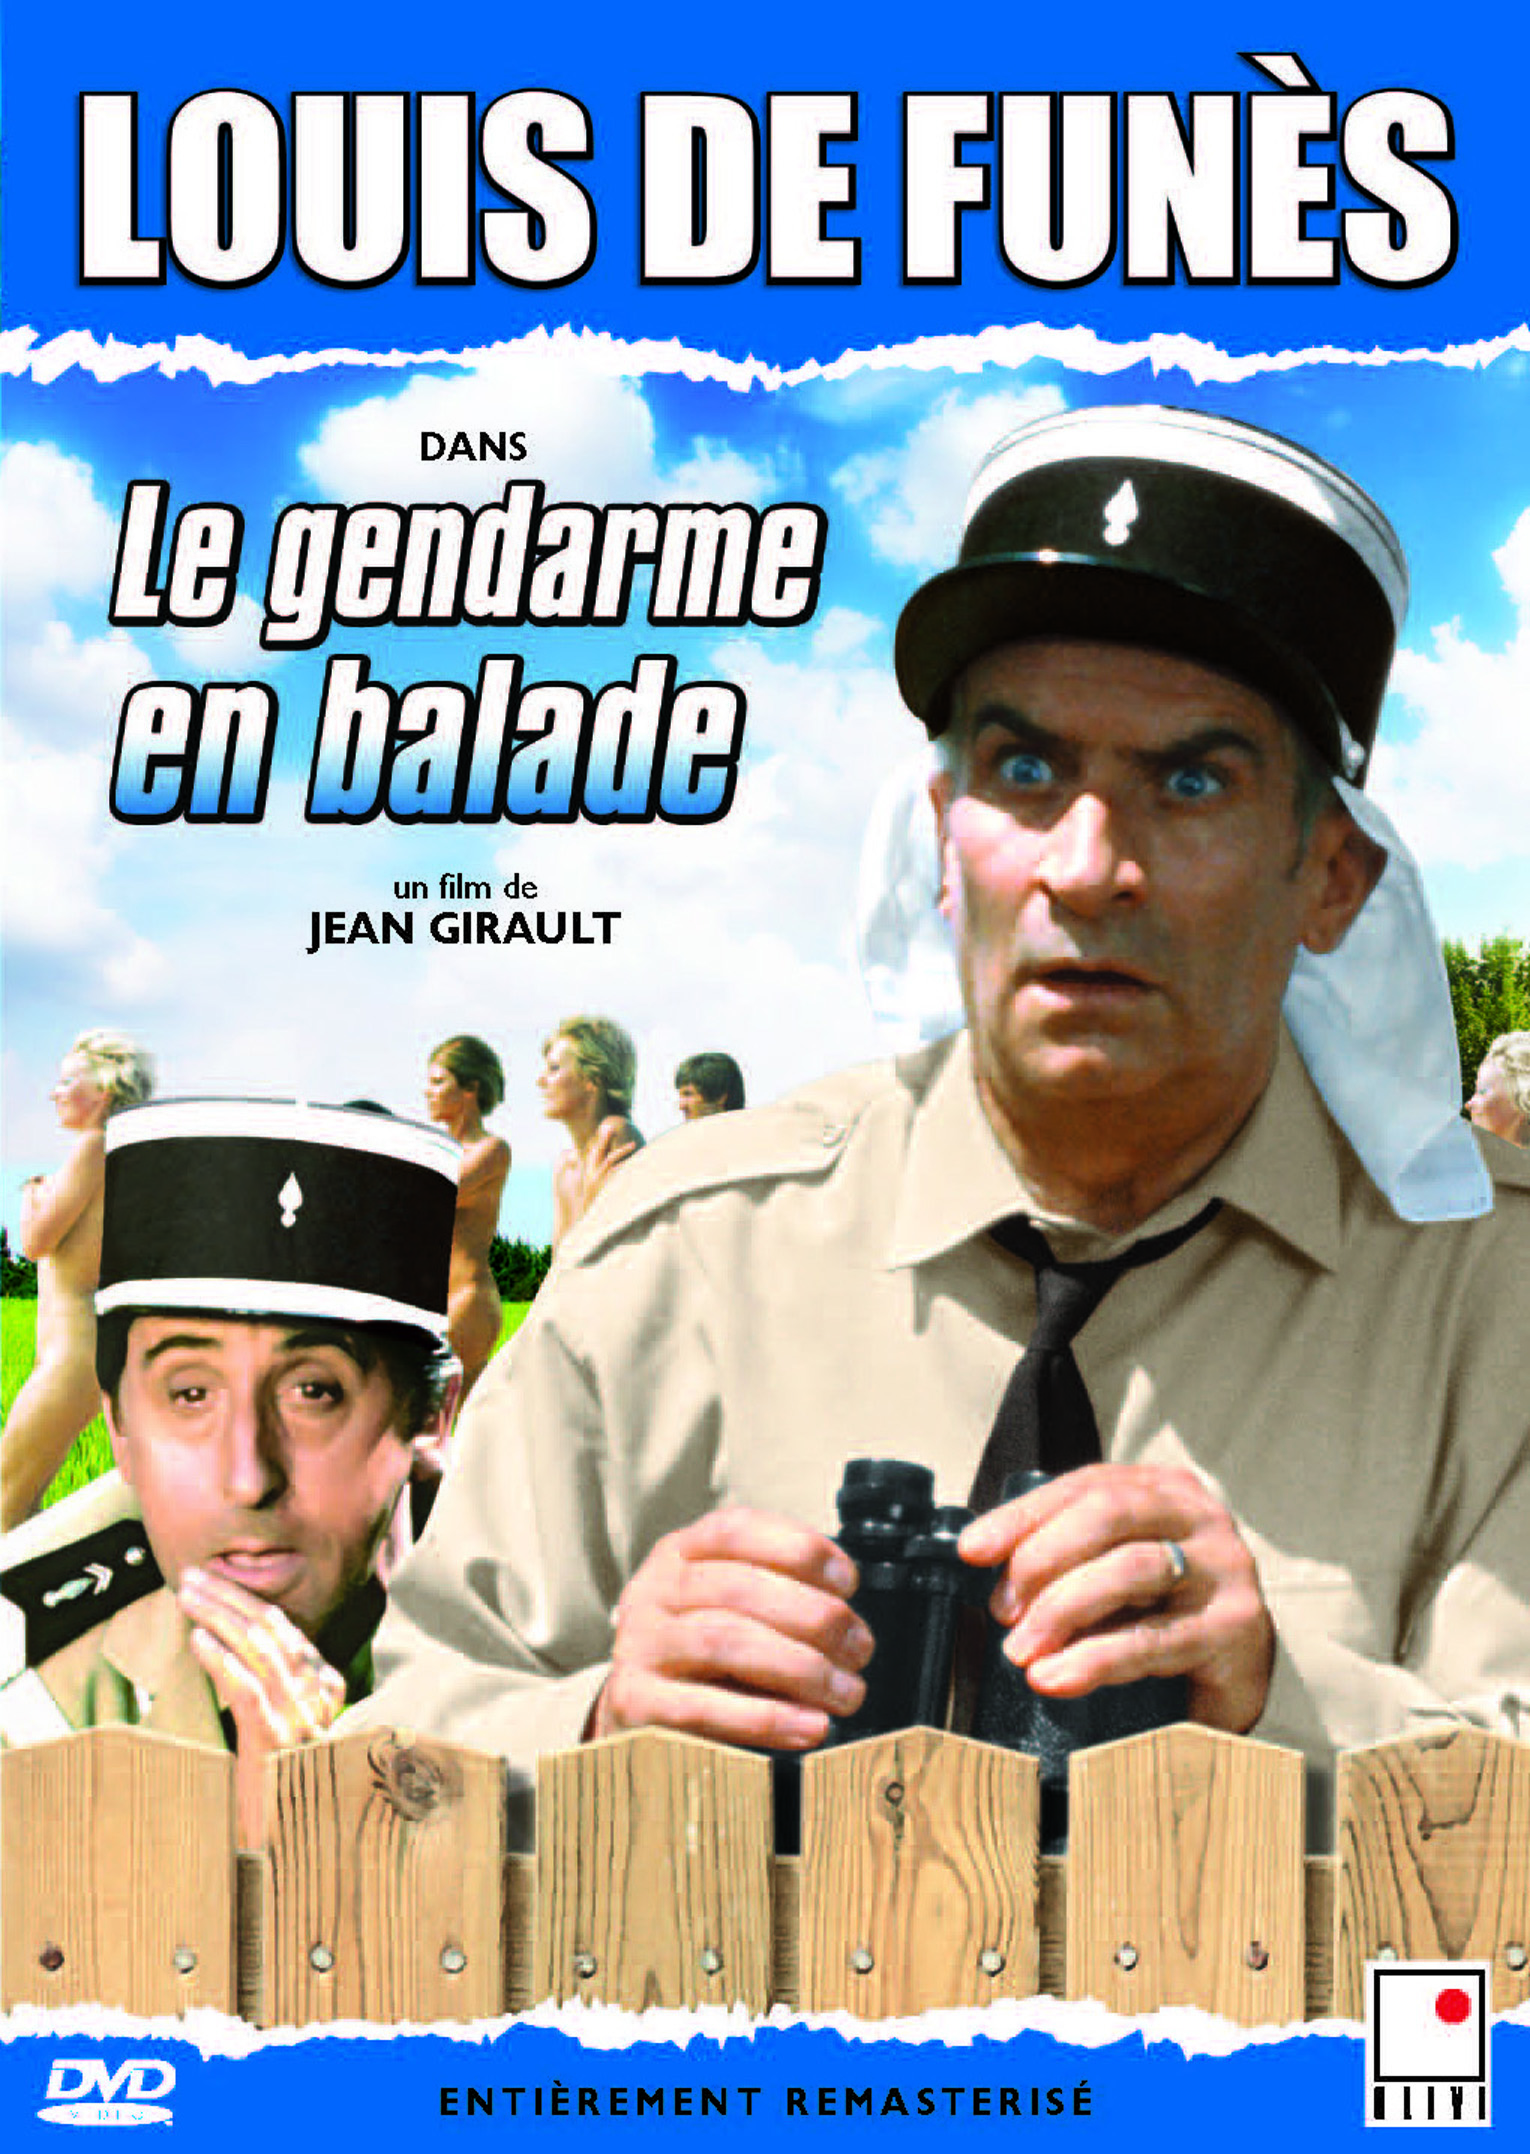 Le Gendarme 4 - Le Gendarme en balade 